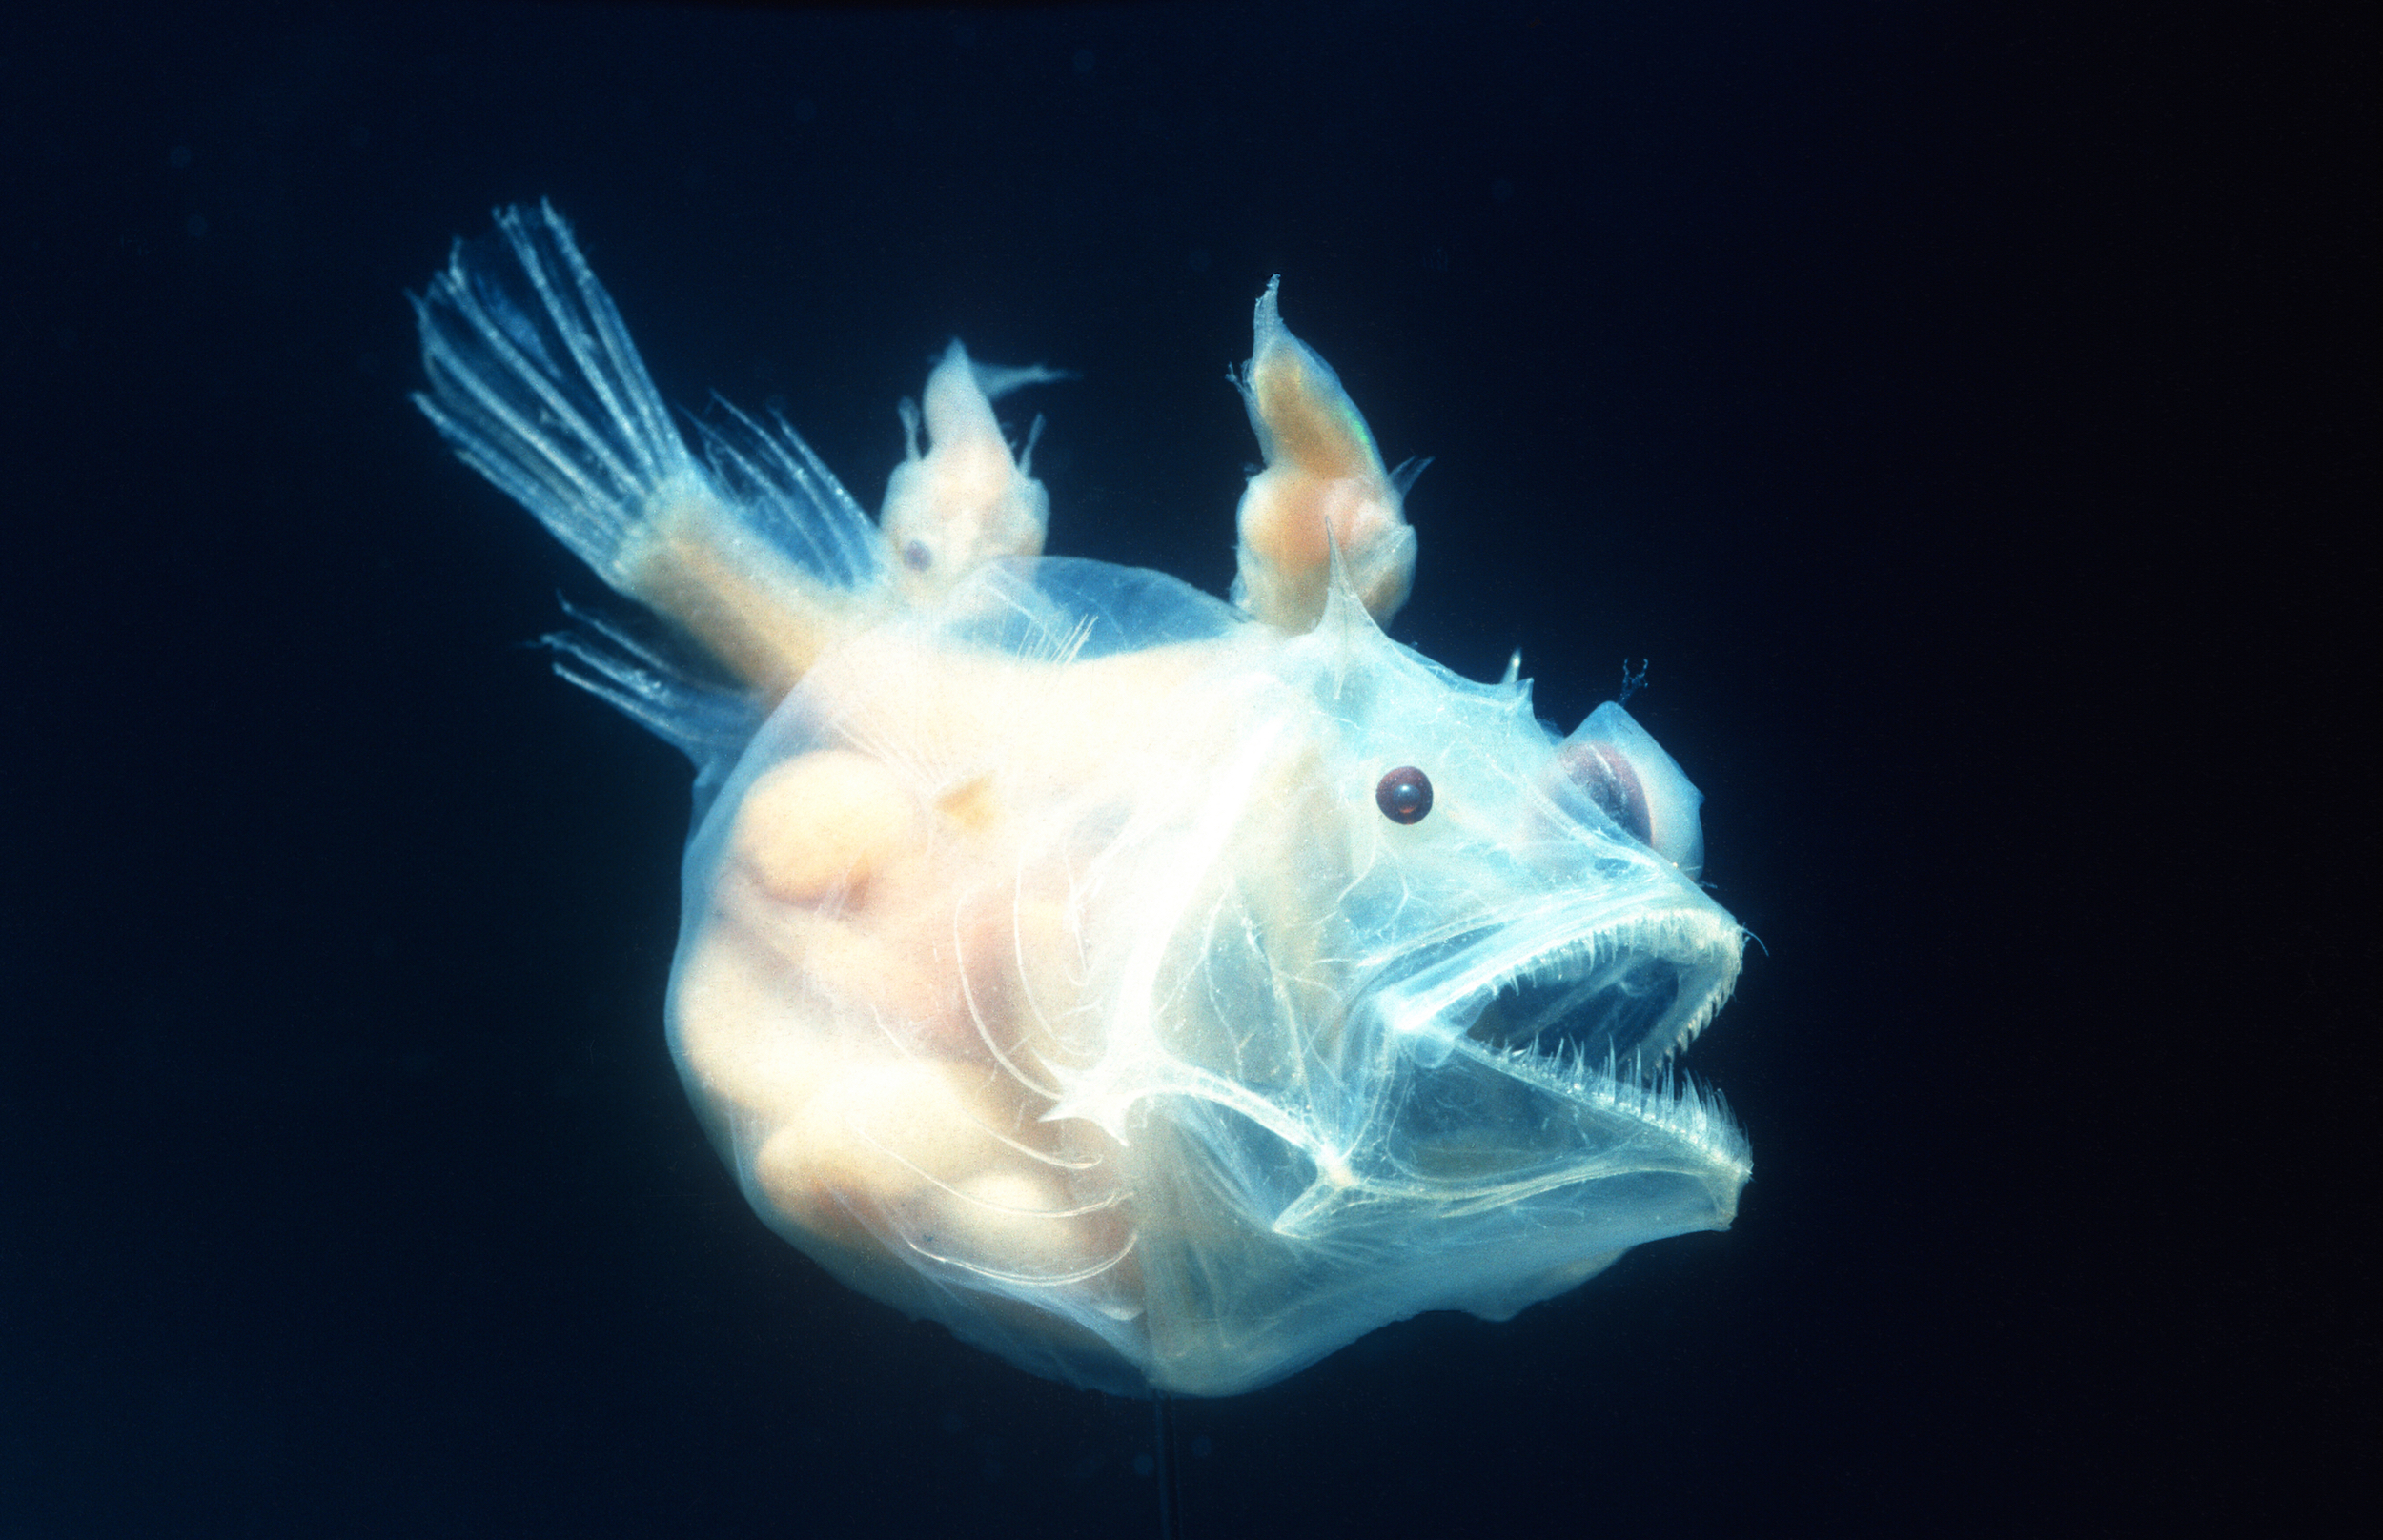 A female anglerfish. Hey, good lookin'!